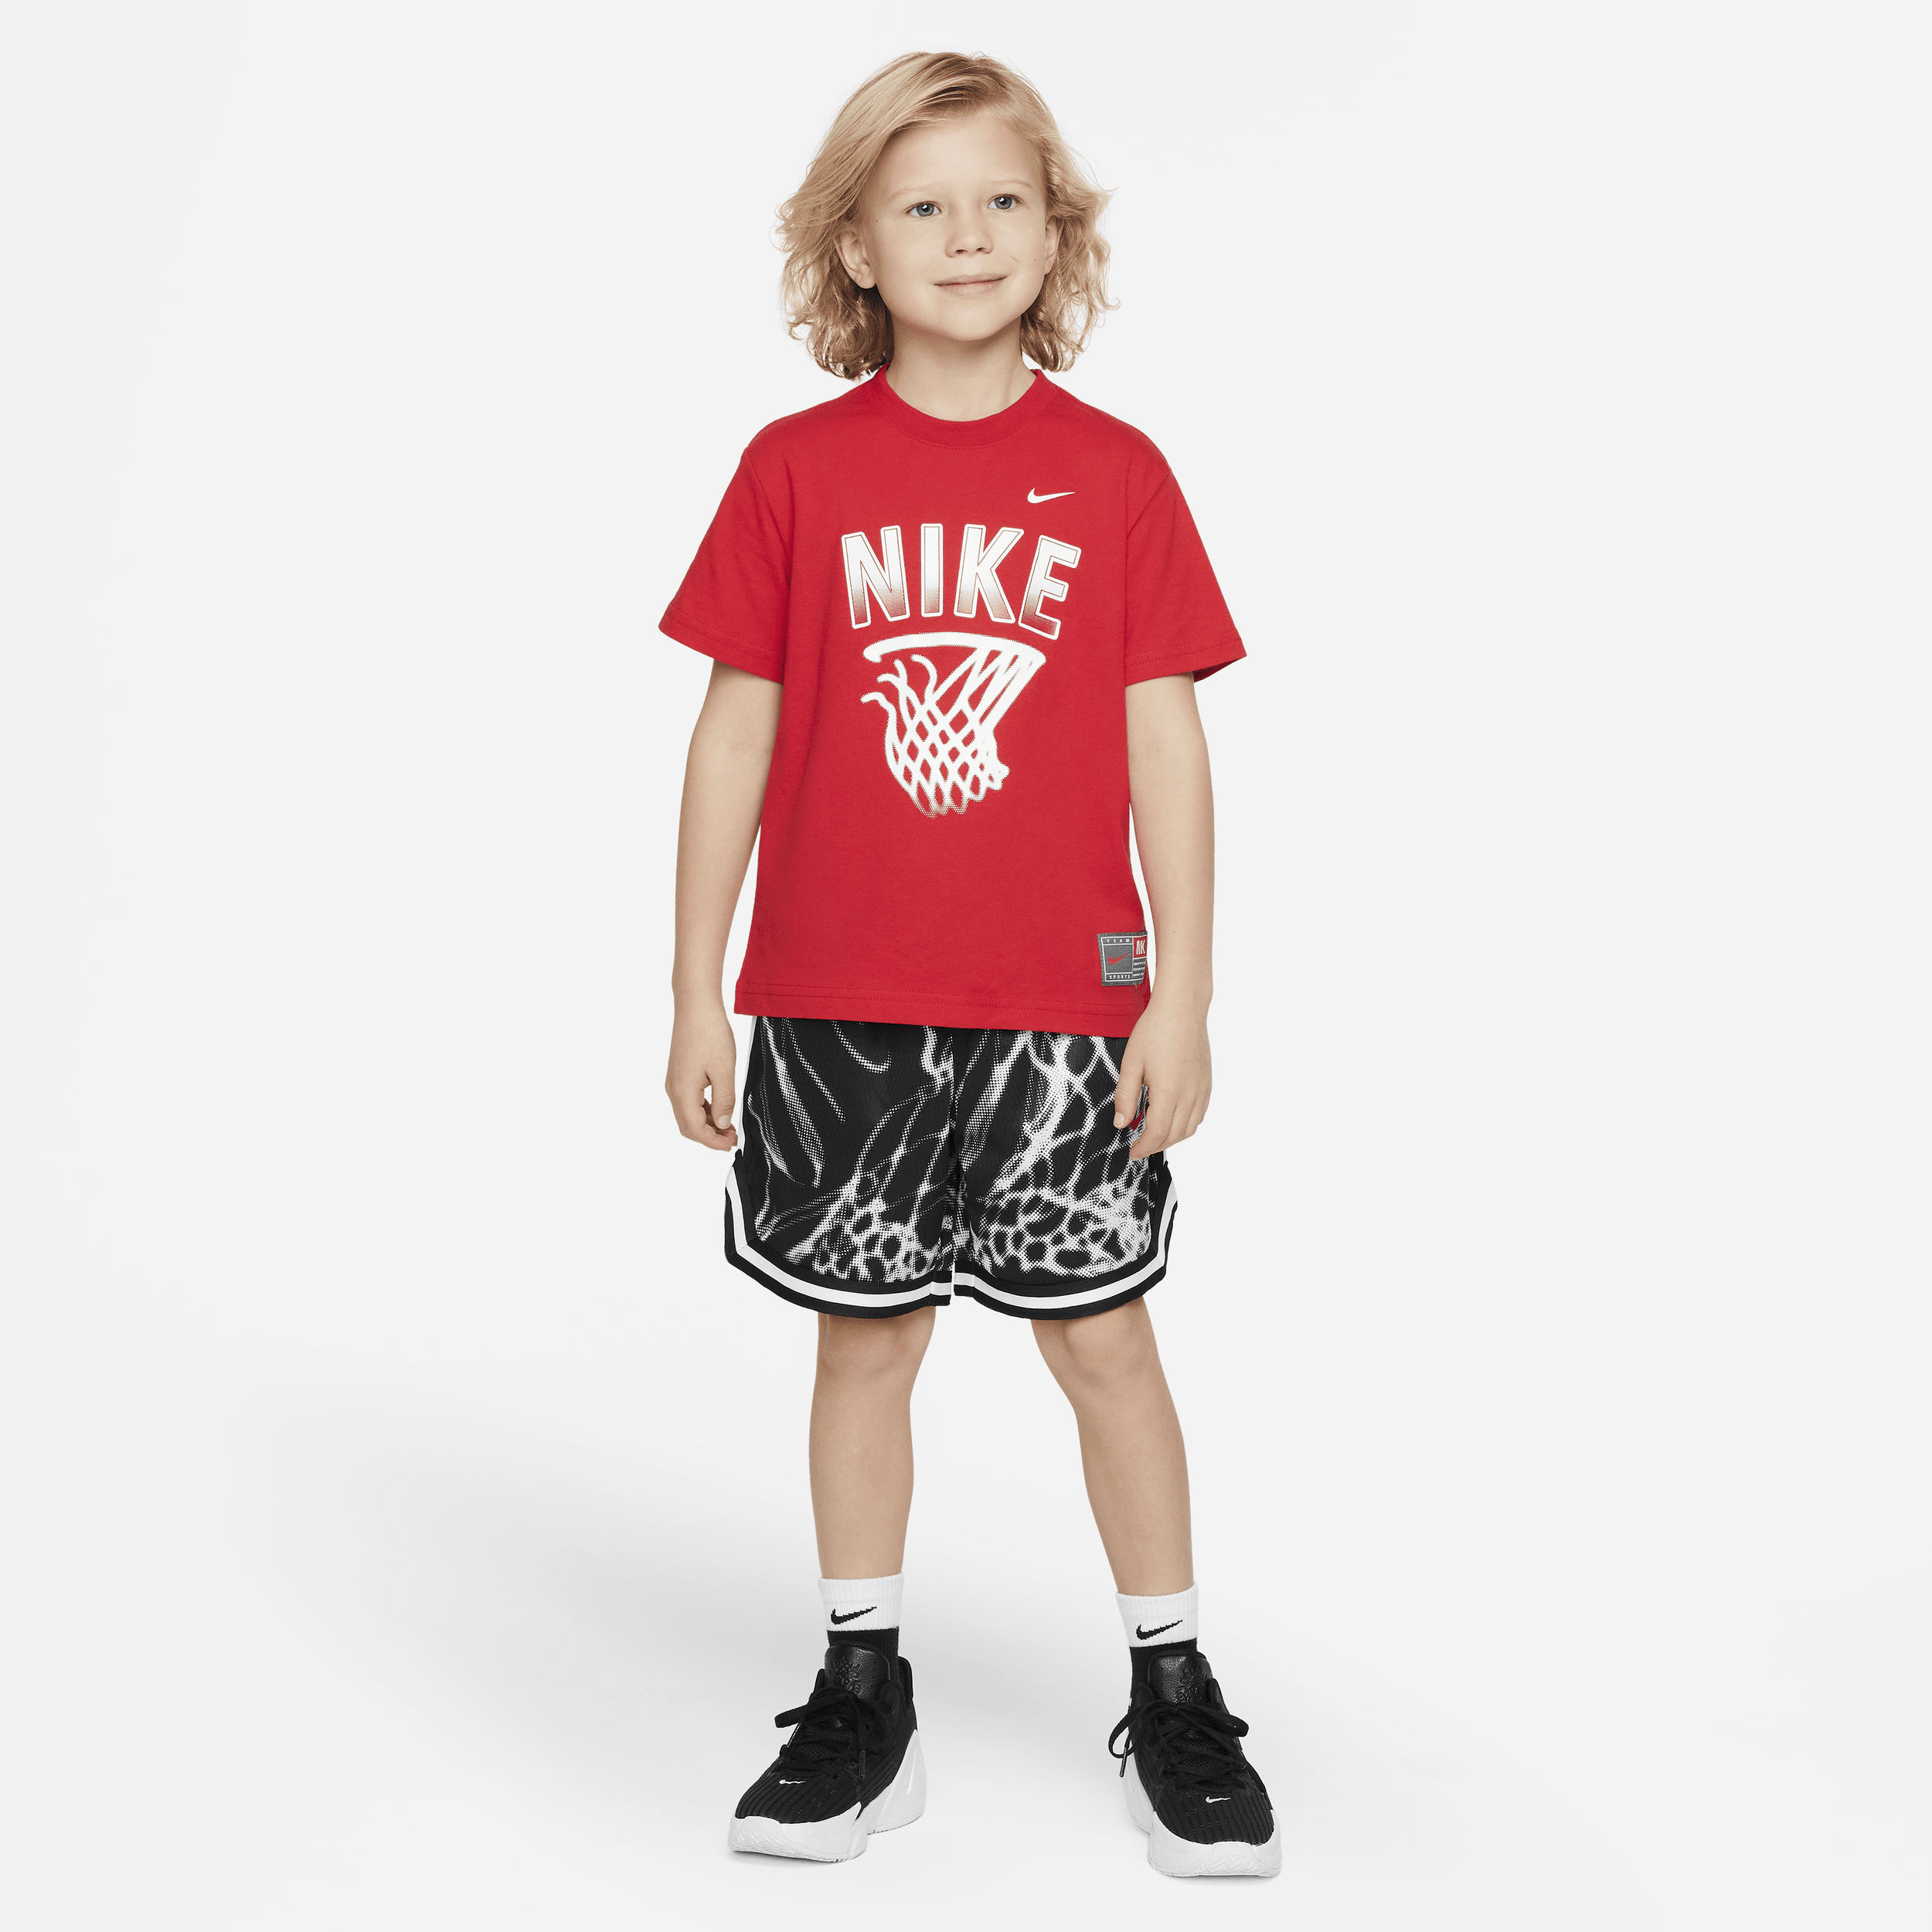 Nike Culture Of Basketball Little Kids' Dri-fit Mesh Shorts Set In Black